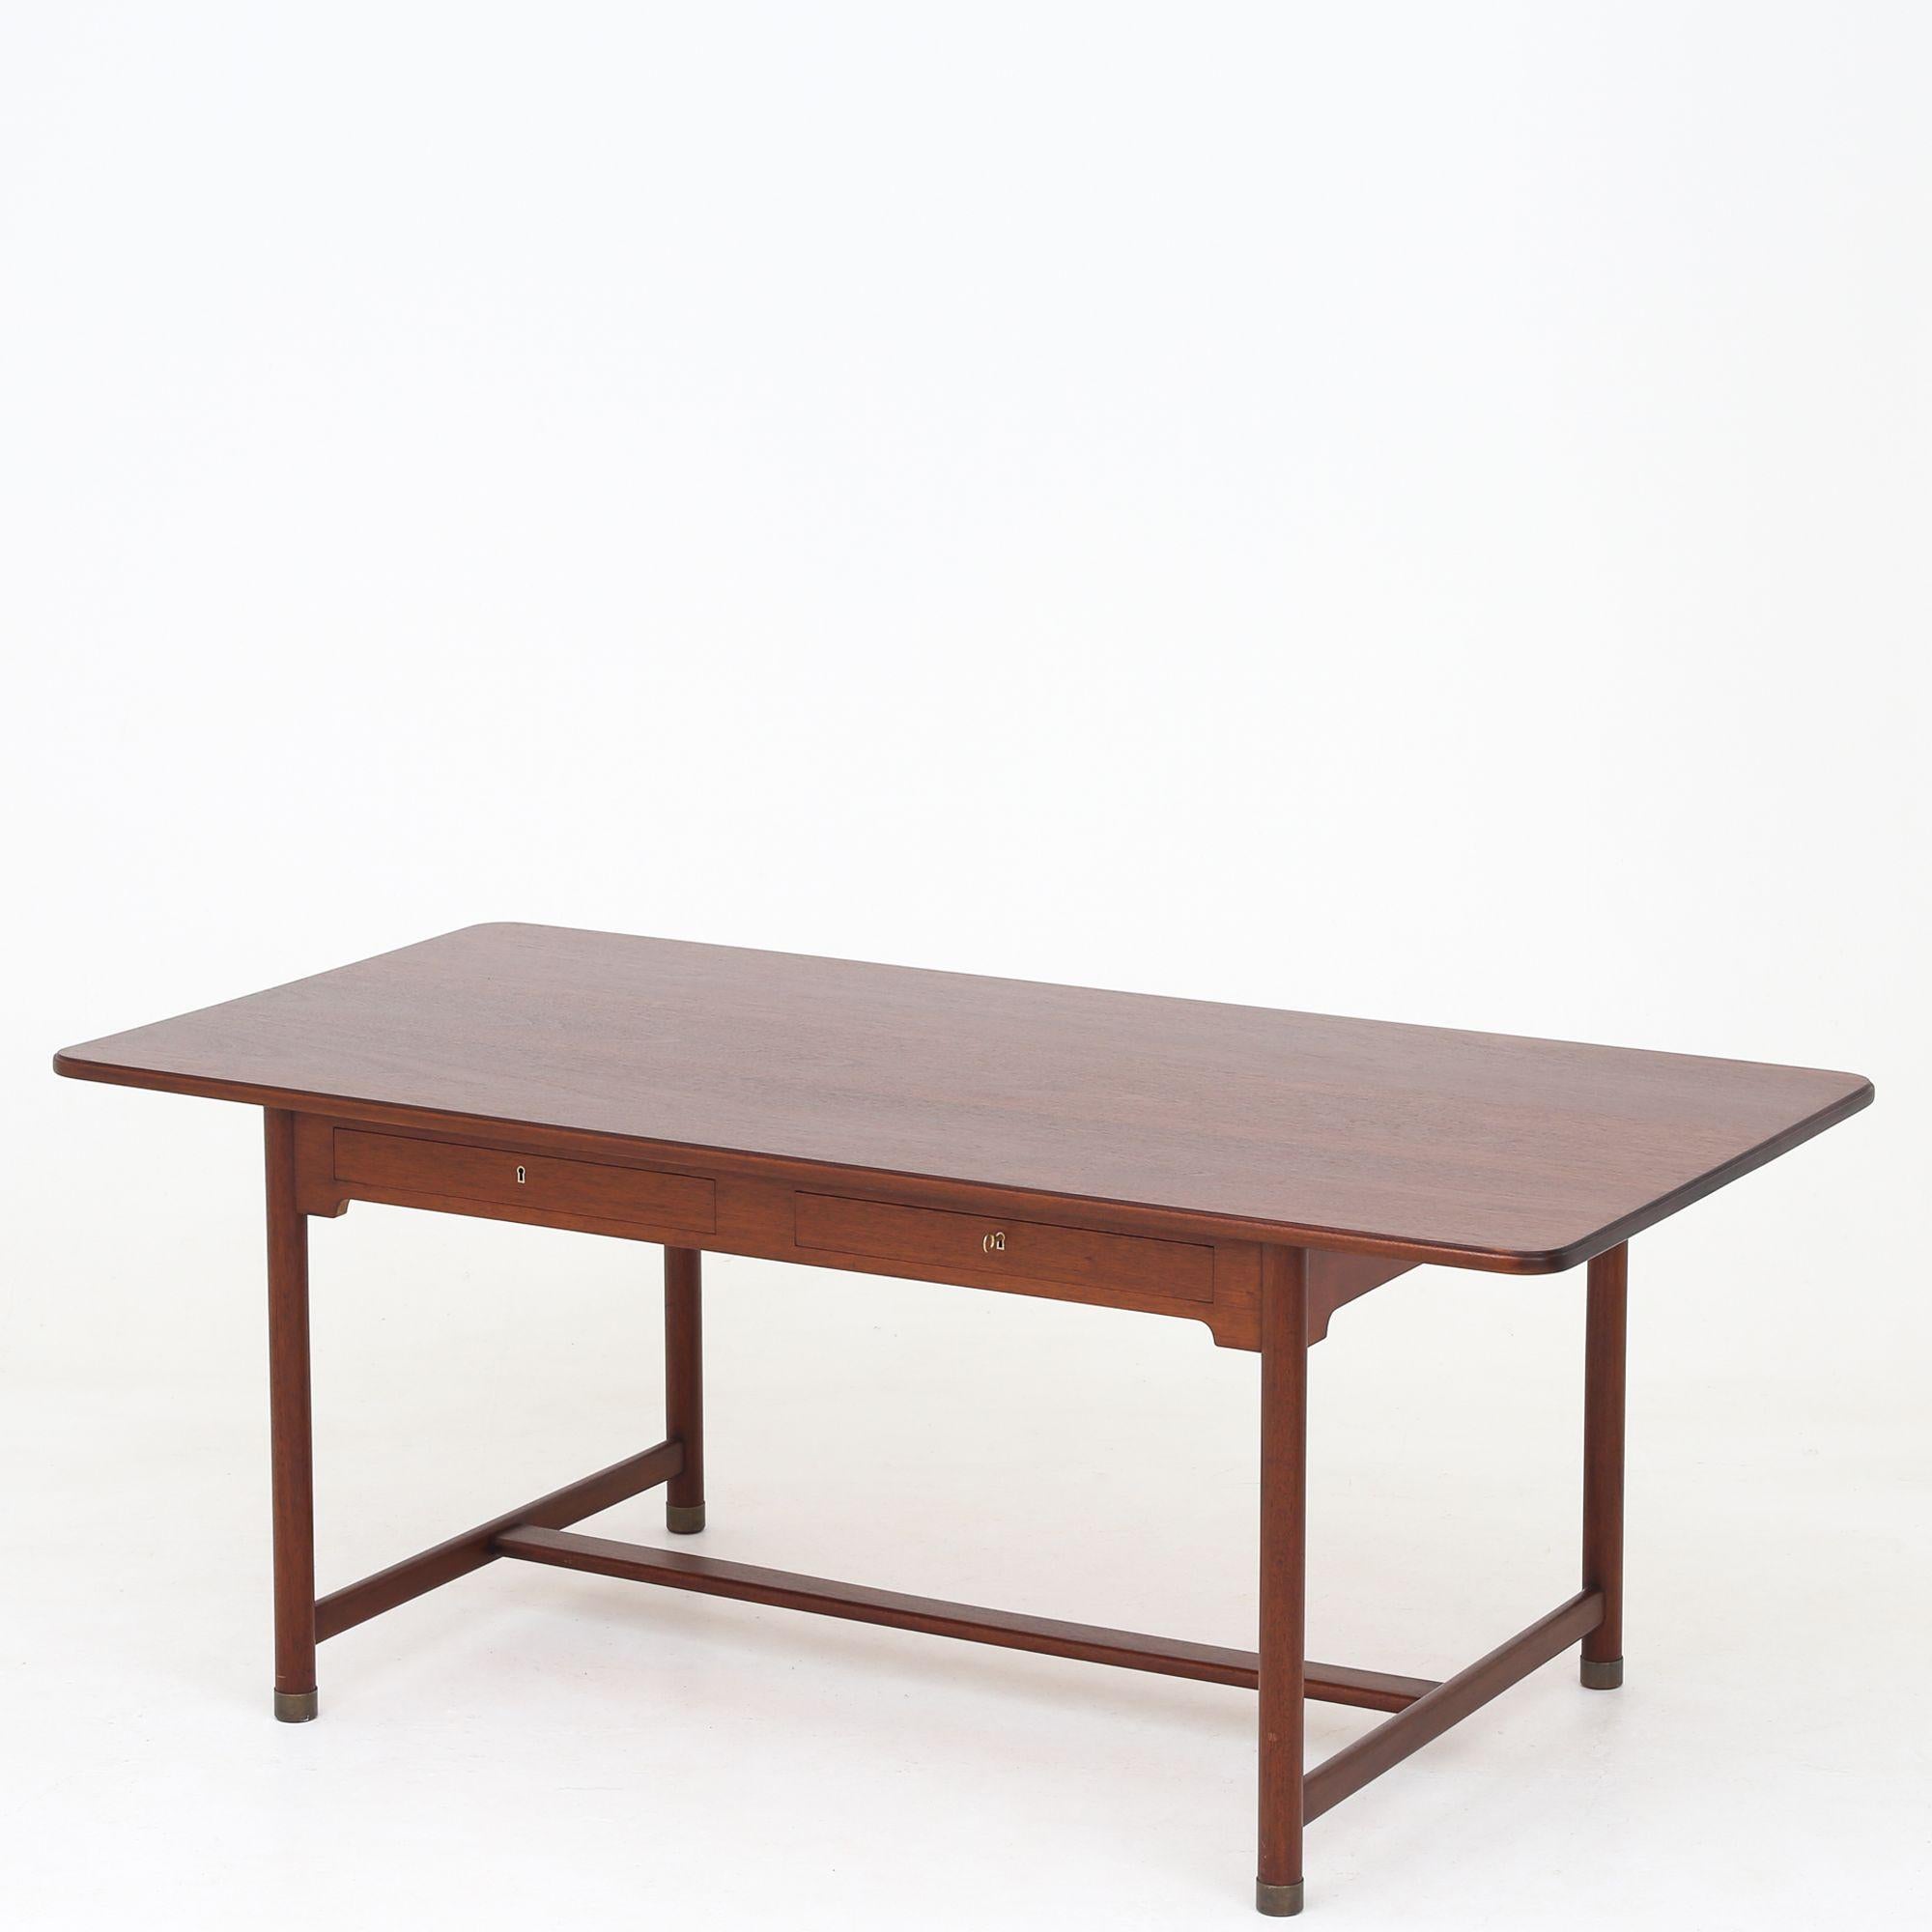 Rare 'Partners Desk' mahogany desk with four drawers, profiled edge and brass shoes. Designed in 1938. Mogens Koch / N. C. Jensen Kjær.